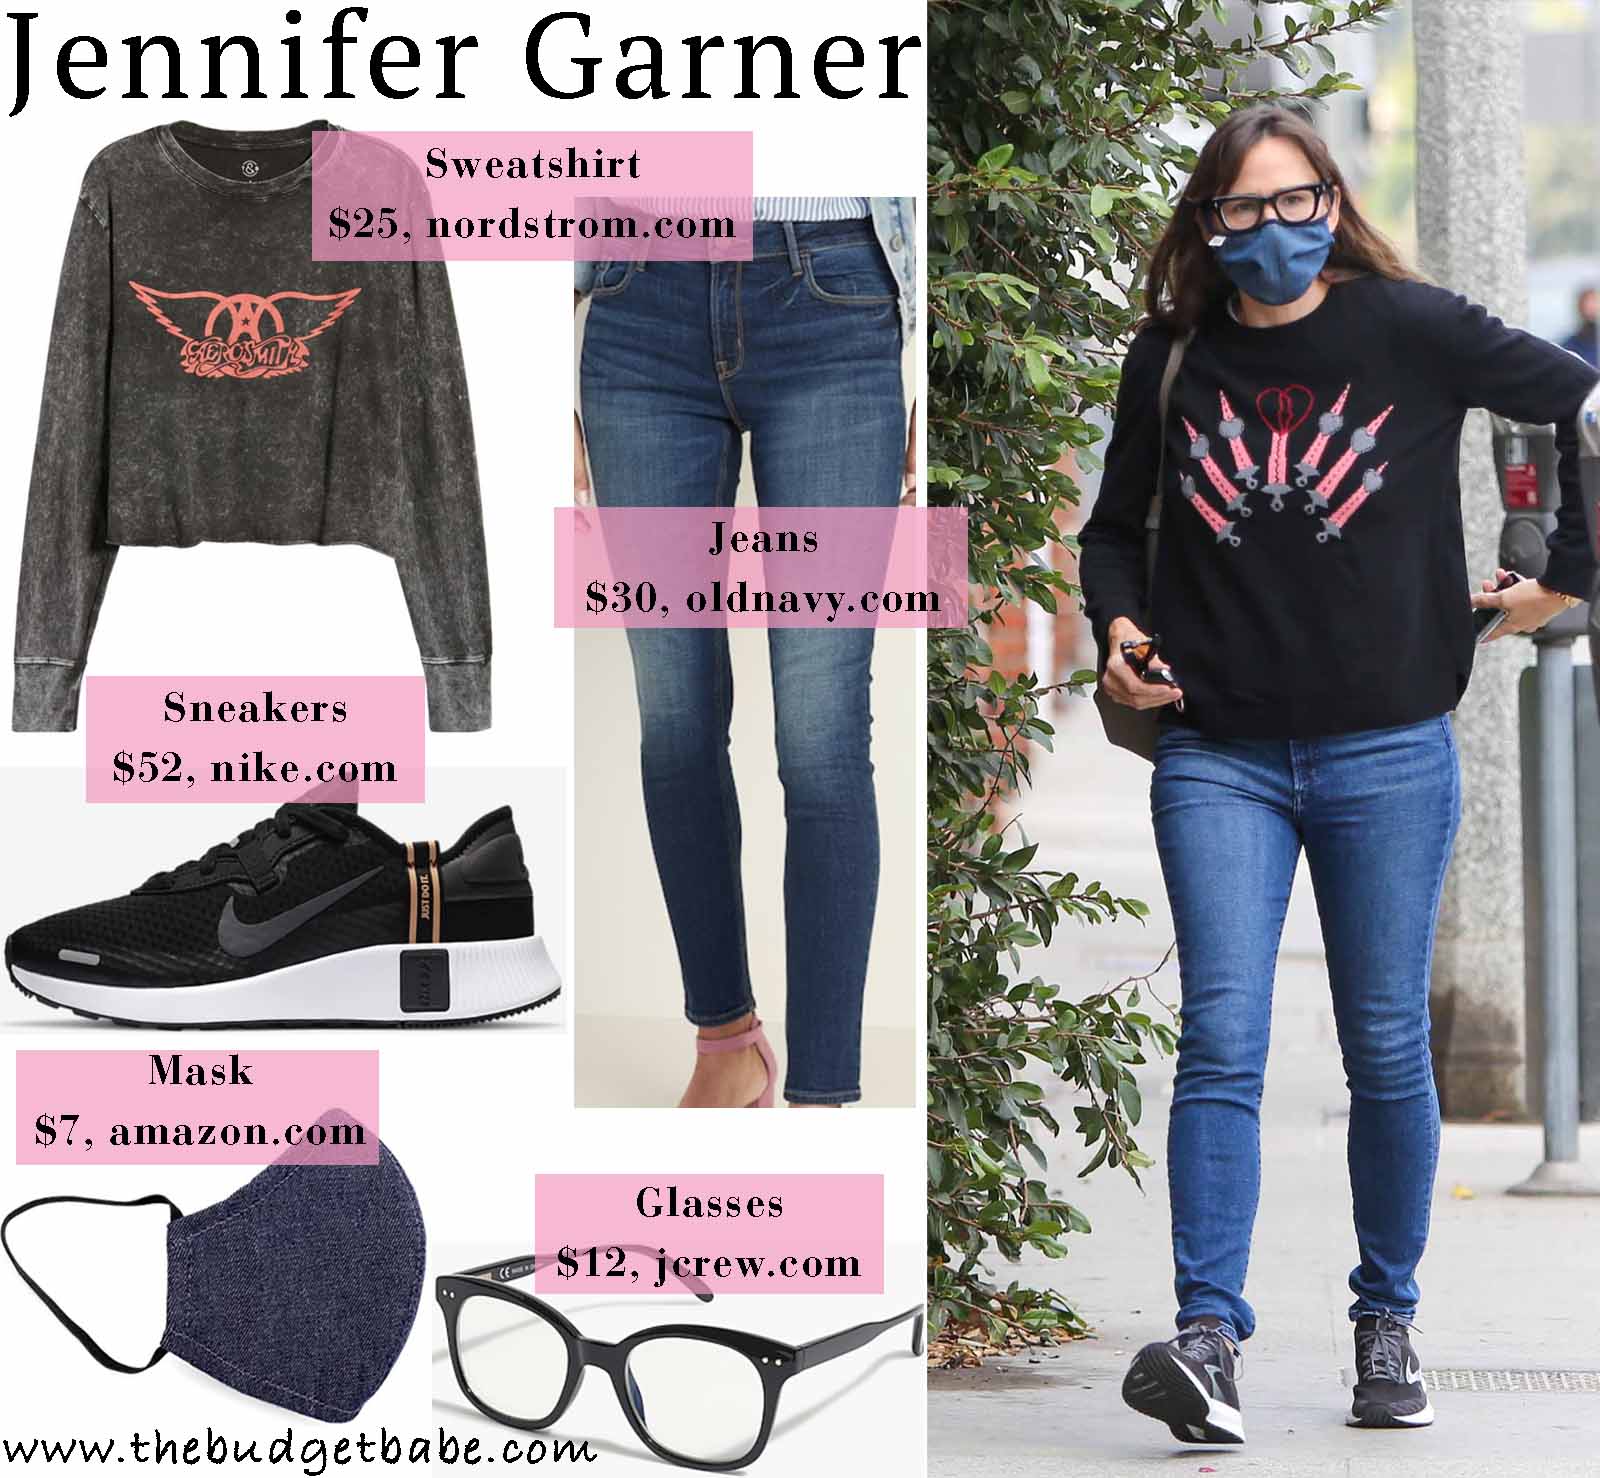 Jennifer Garner's casual holiday style!